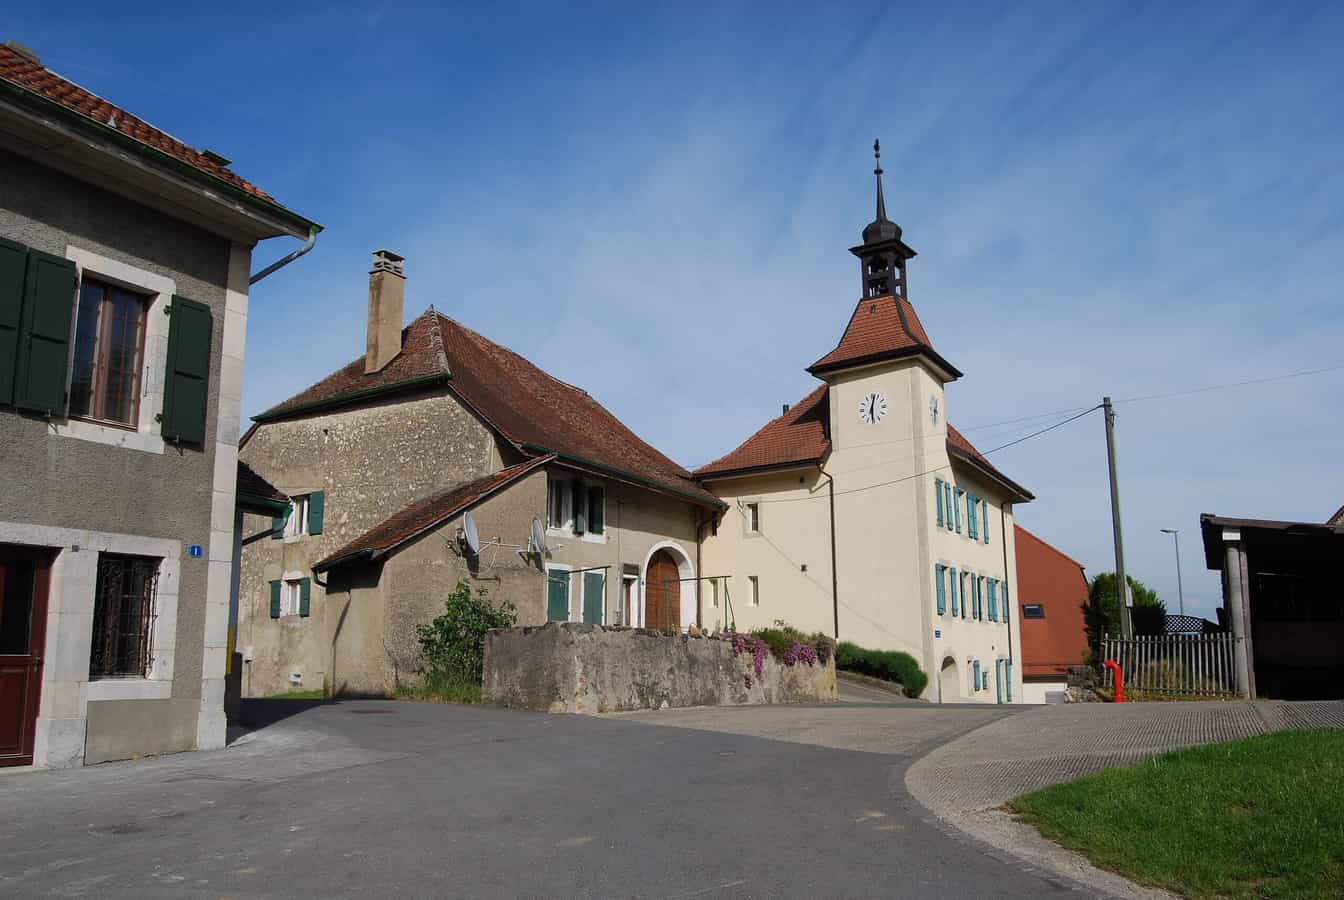 Sergey, canton of Vaud, Switzerland